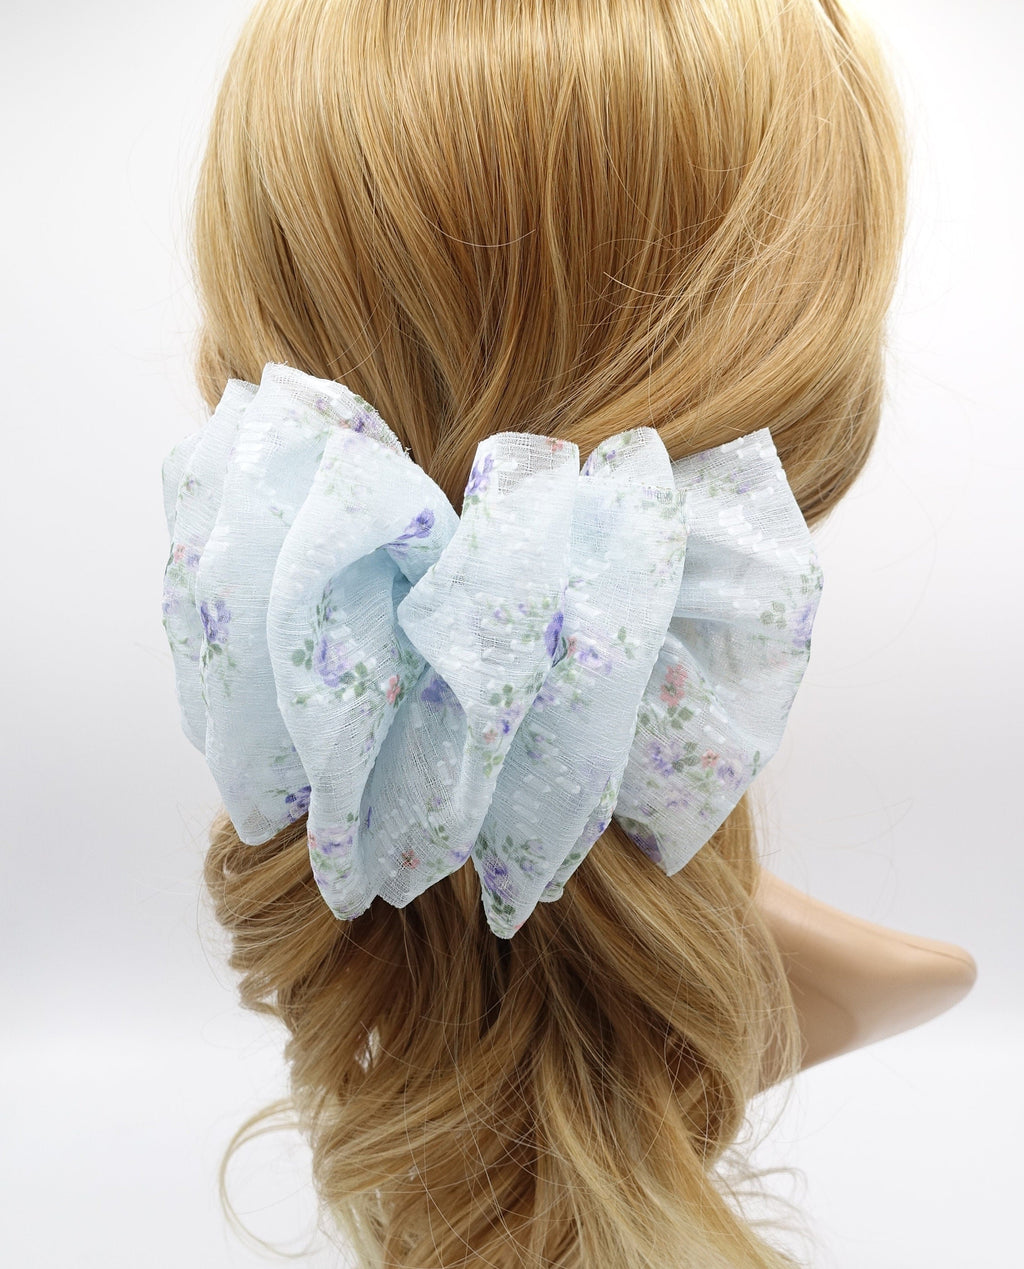 veryshine.com Barrette (Bow) Sky blue chiffon floral ruffle hair bow for women